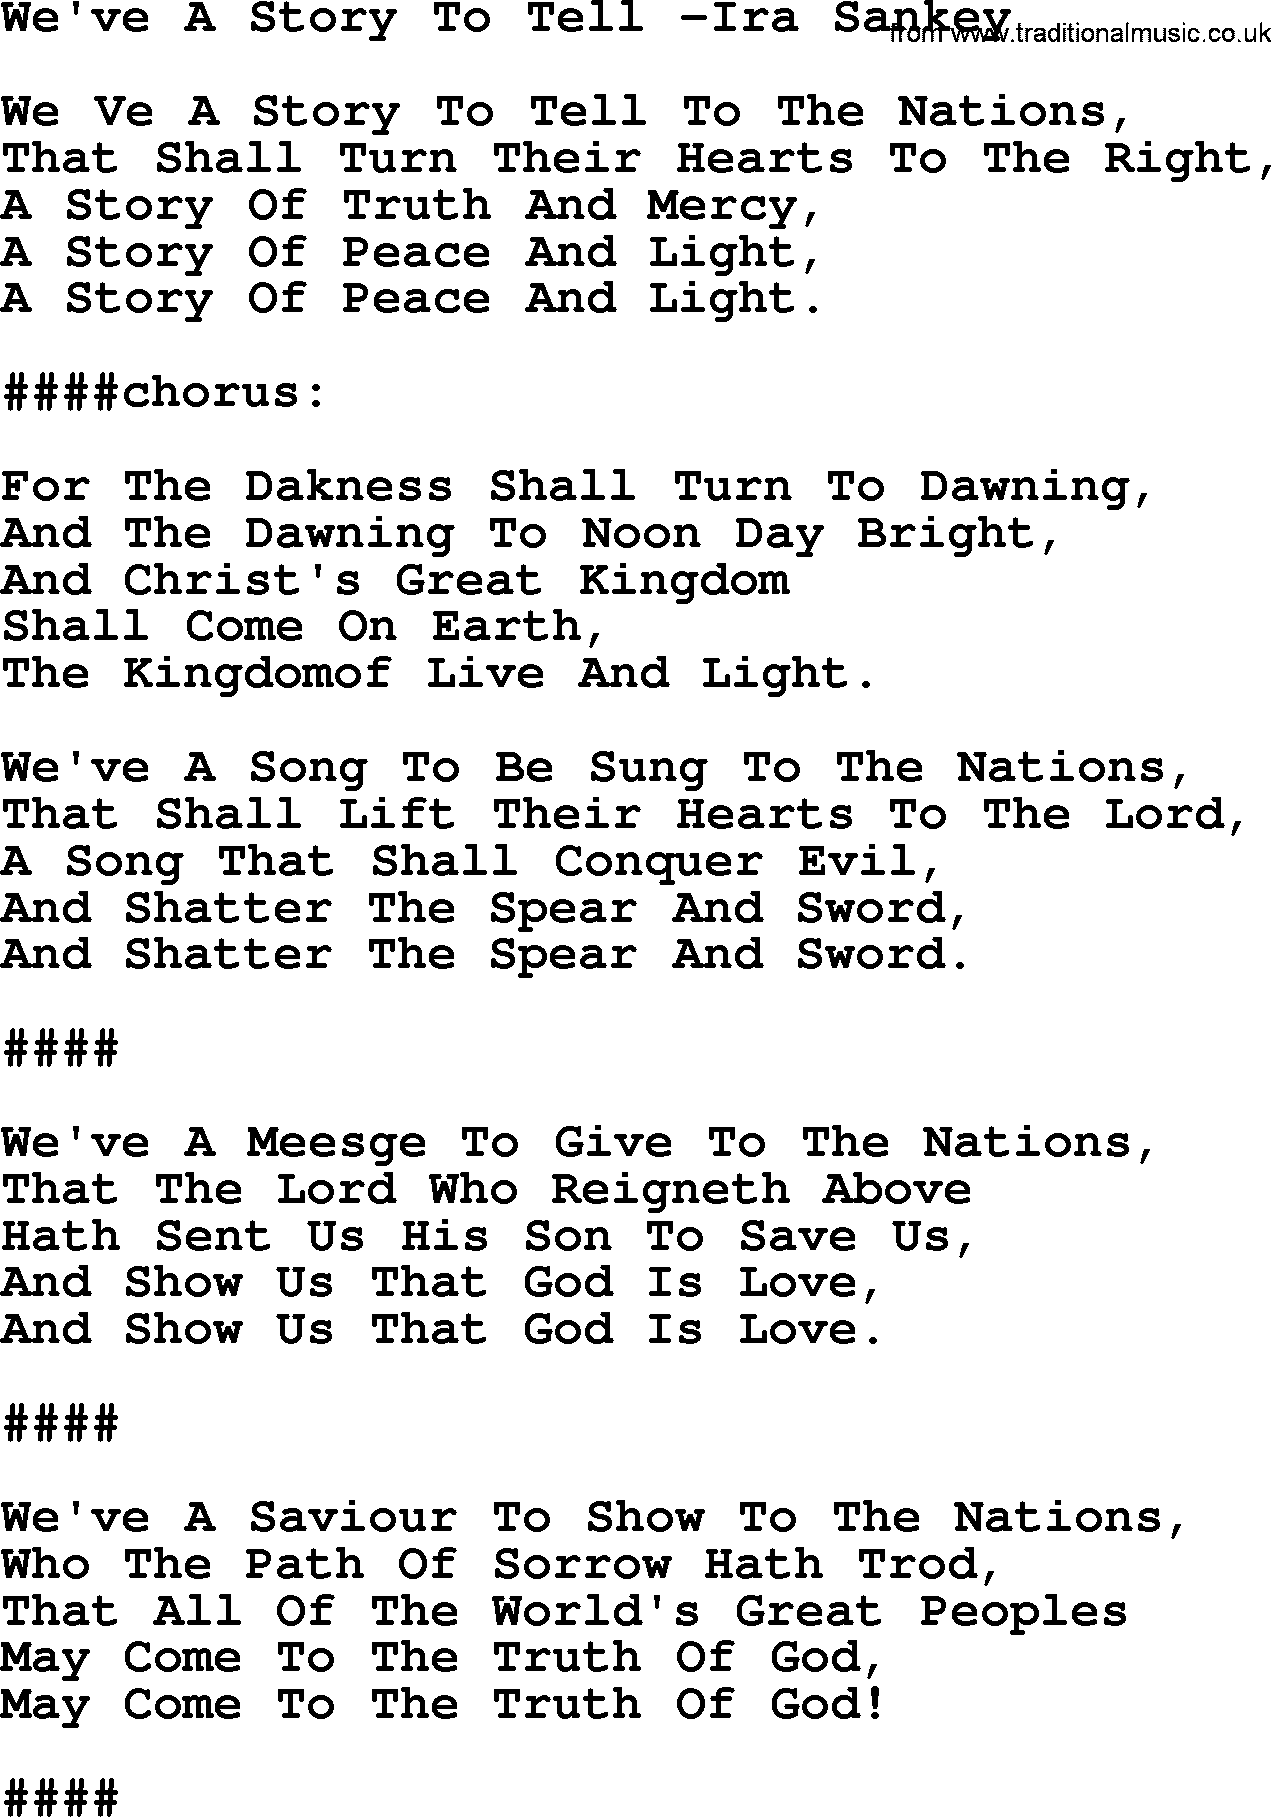 Ira Sankey hymn: We've A Story To Tell-Ira Sankey, lyrics